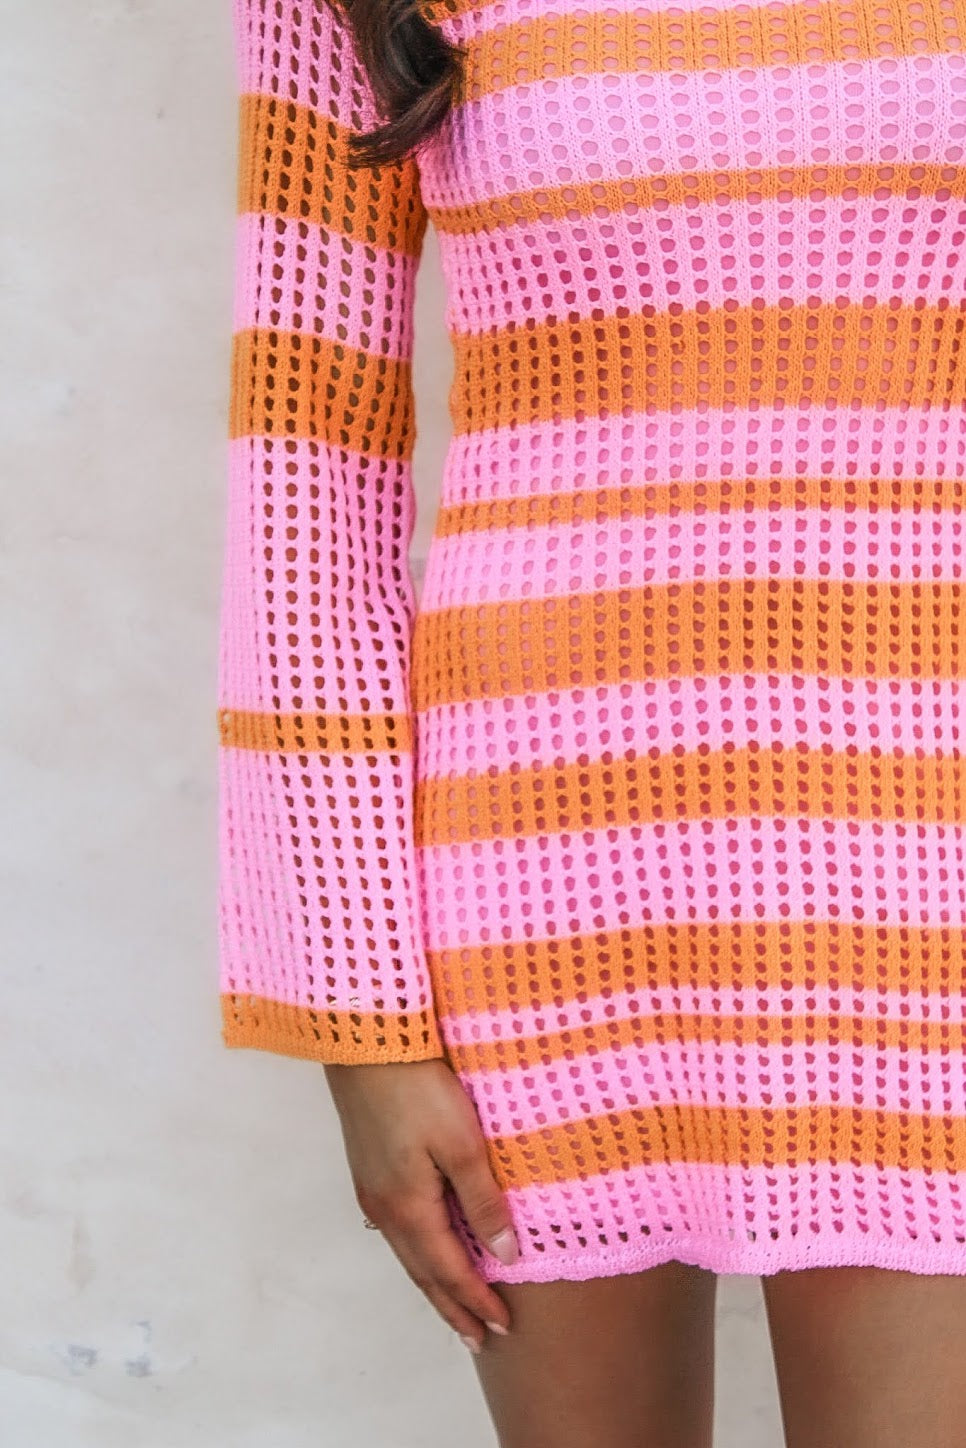 Piper Striped Crochet Dress